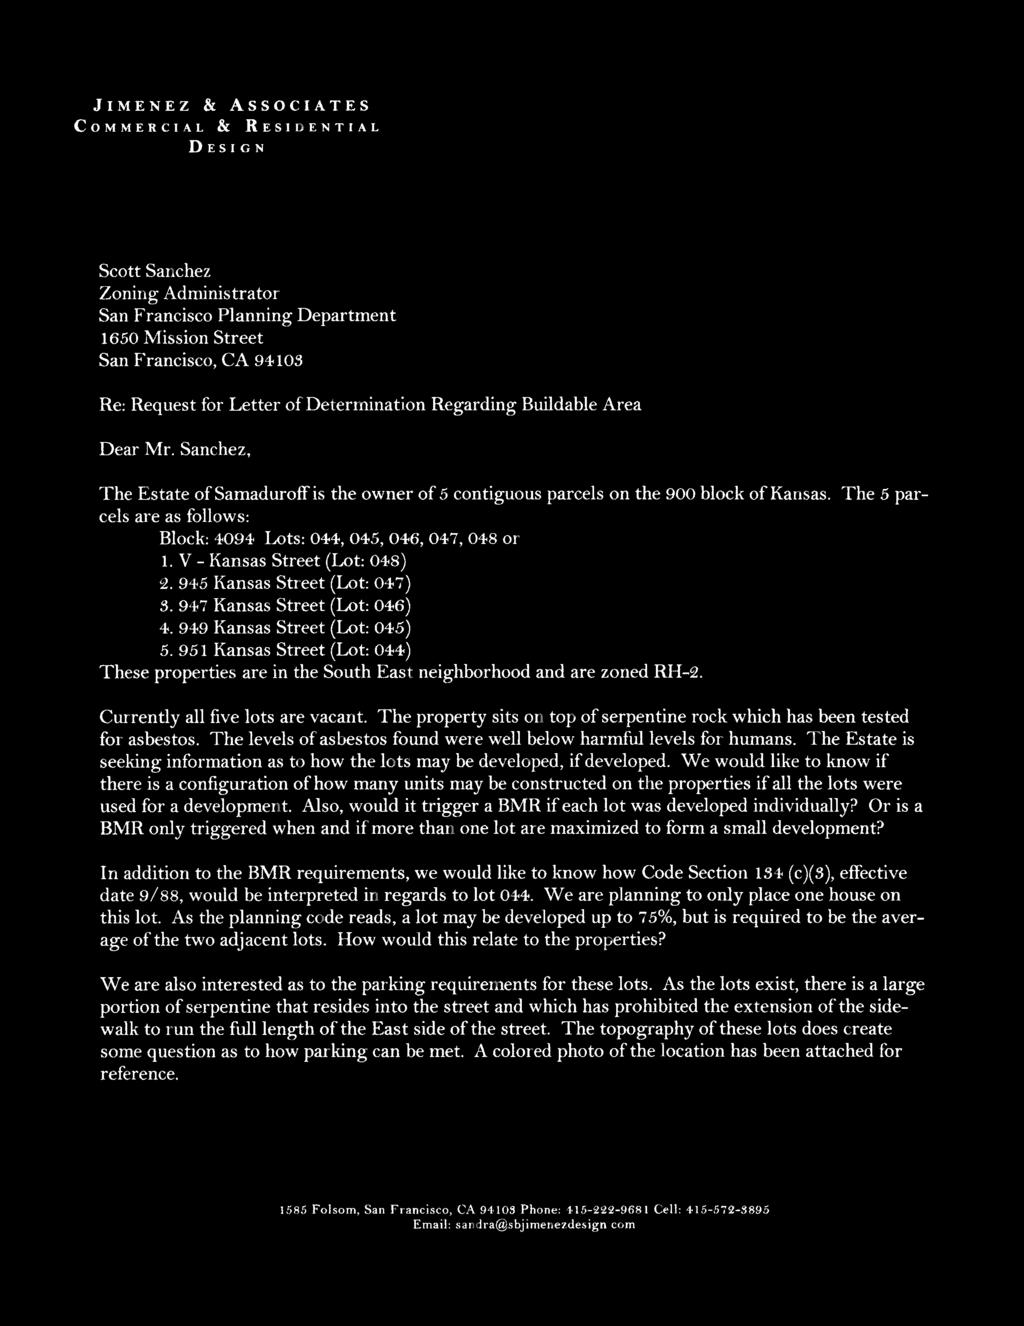 JIMENEZ & ASSOCIATES COMMERCIAL & RESIDENTIAL D E S I G N (1k: Scott Sanchez Zoning Administrator San Francisco Planning Department 1650 Mission Street San Francisco, CA 94103 Re: Request for Letter